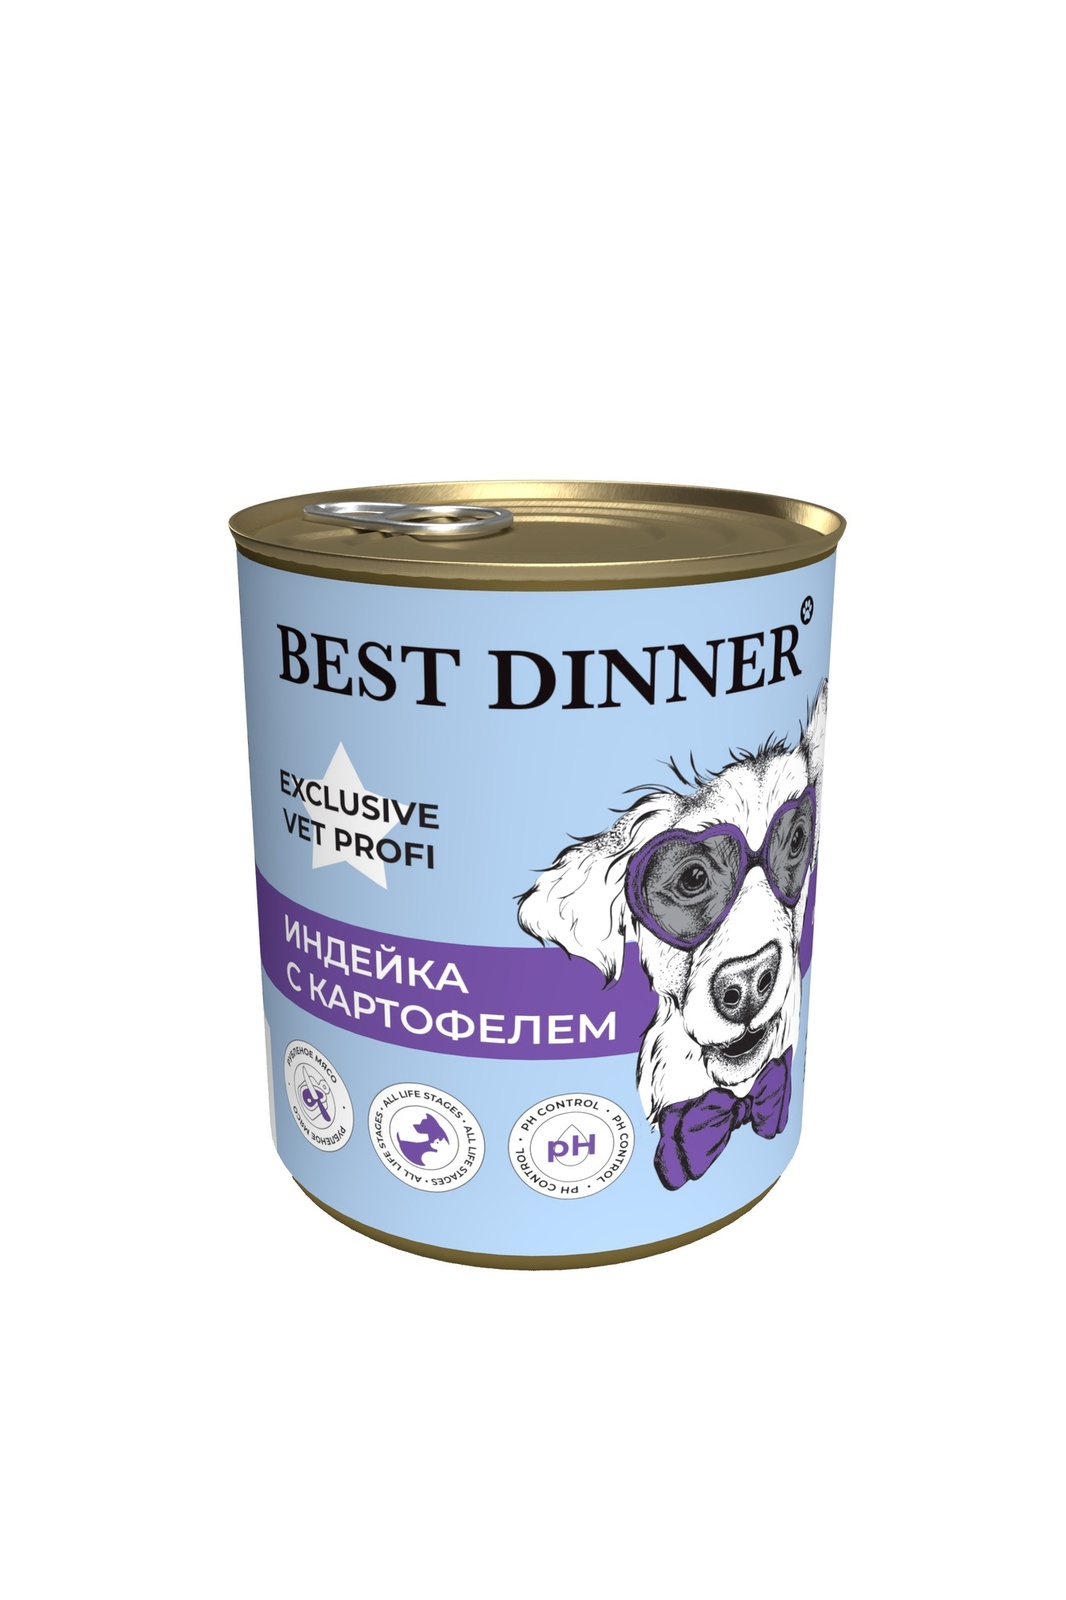 Best Dinner Best Dinner консервы для собак Exclusive Urinary Индейка с картофелем (340 г) best dinner best dinner гипоаллергенные консервы индейка и кролик для собак всех пород 340 г